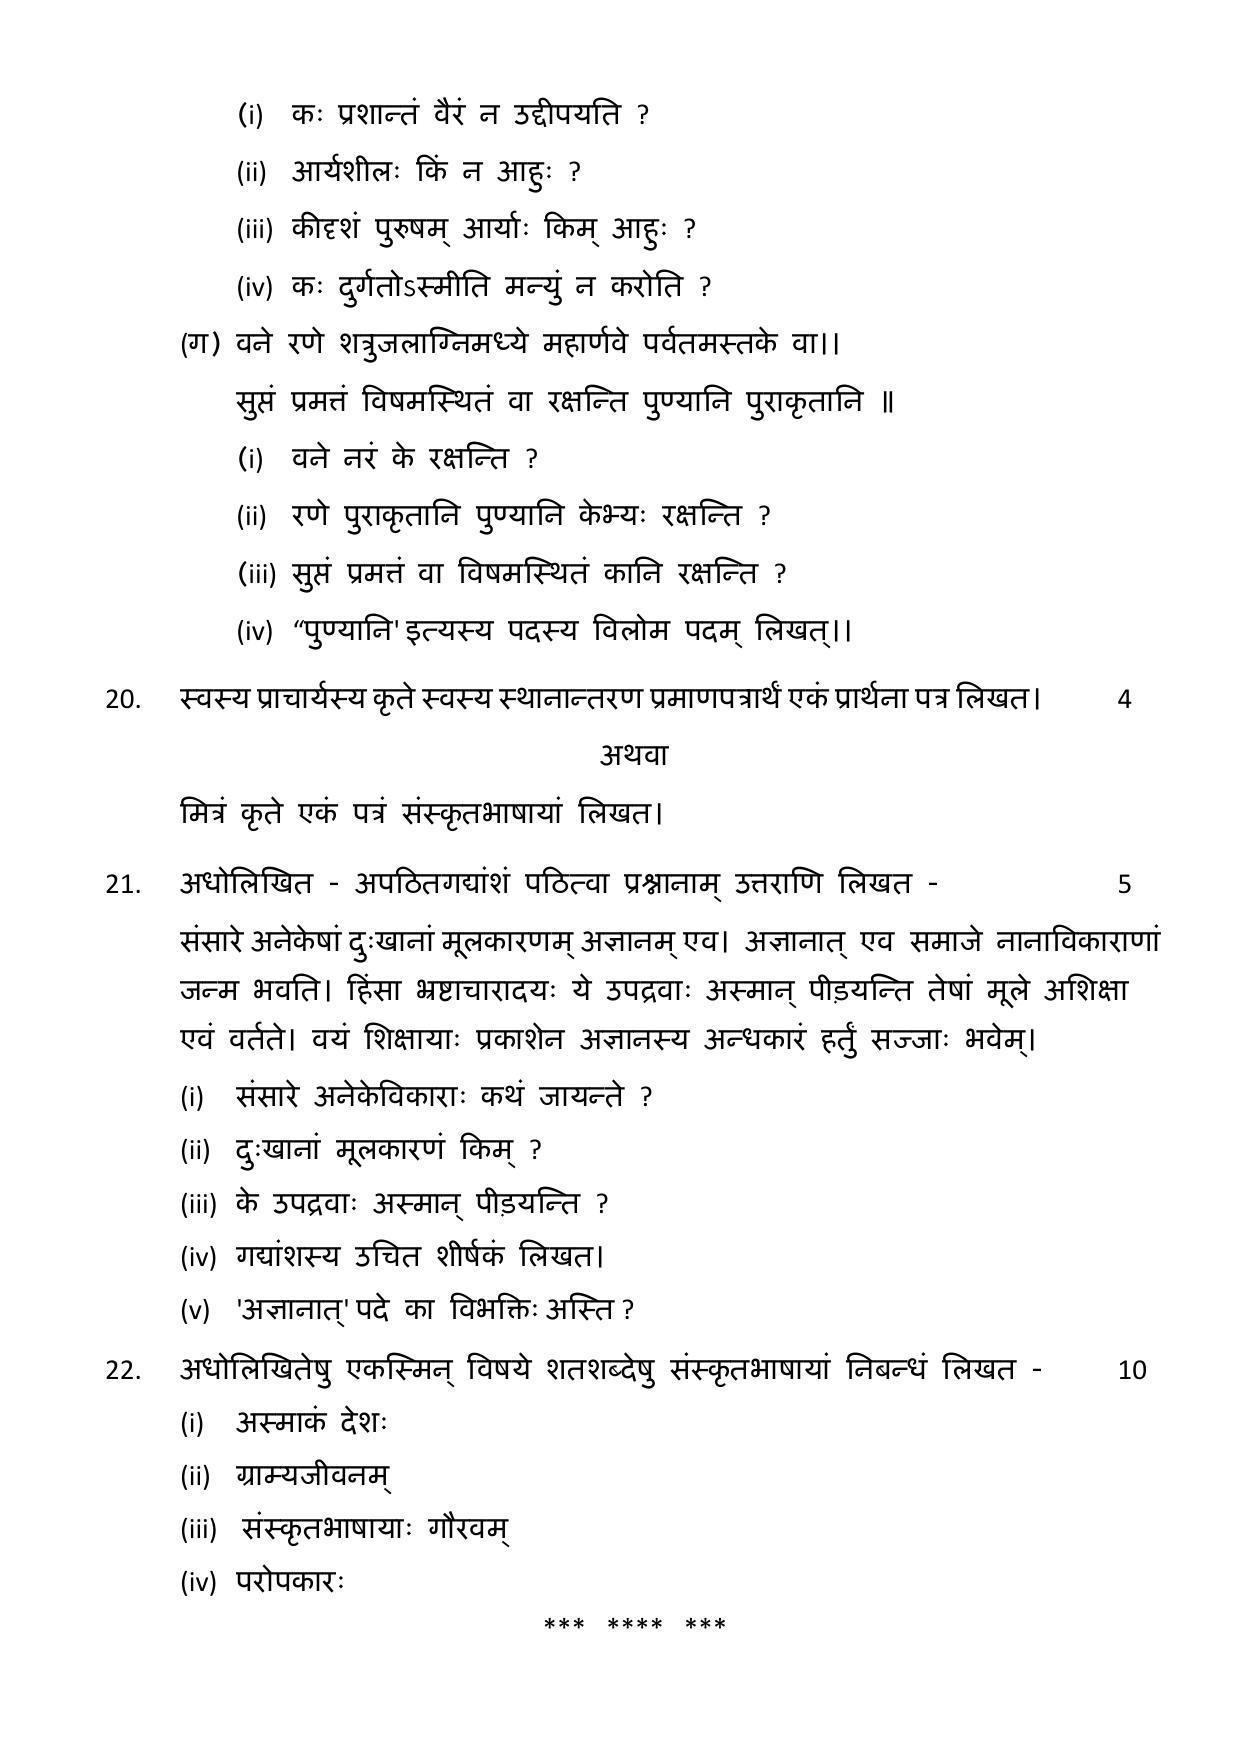 MP Board Class 12 Sanskrit 2019 Question Paper - Page 8